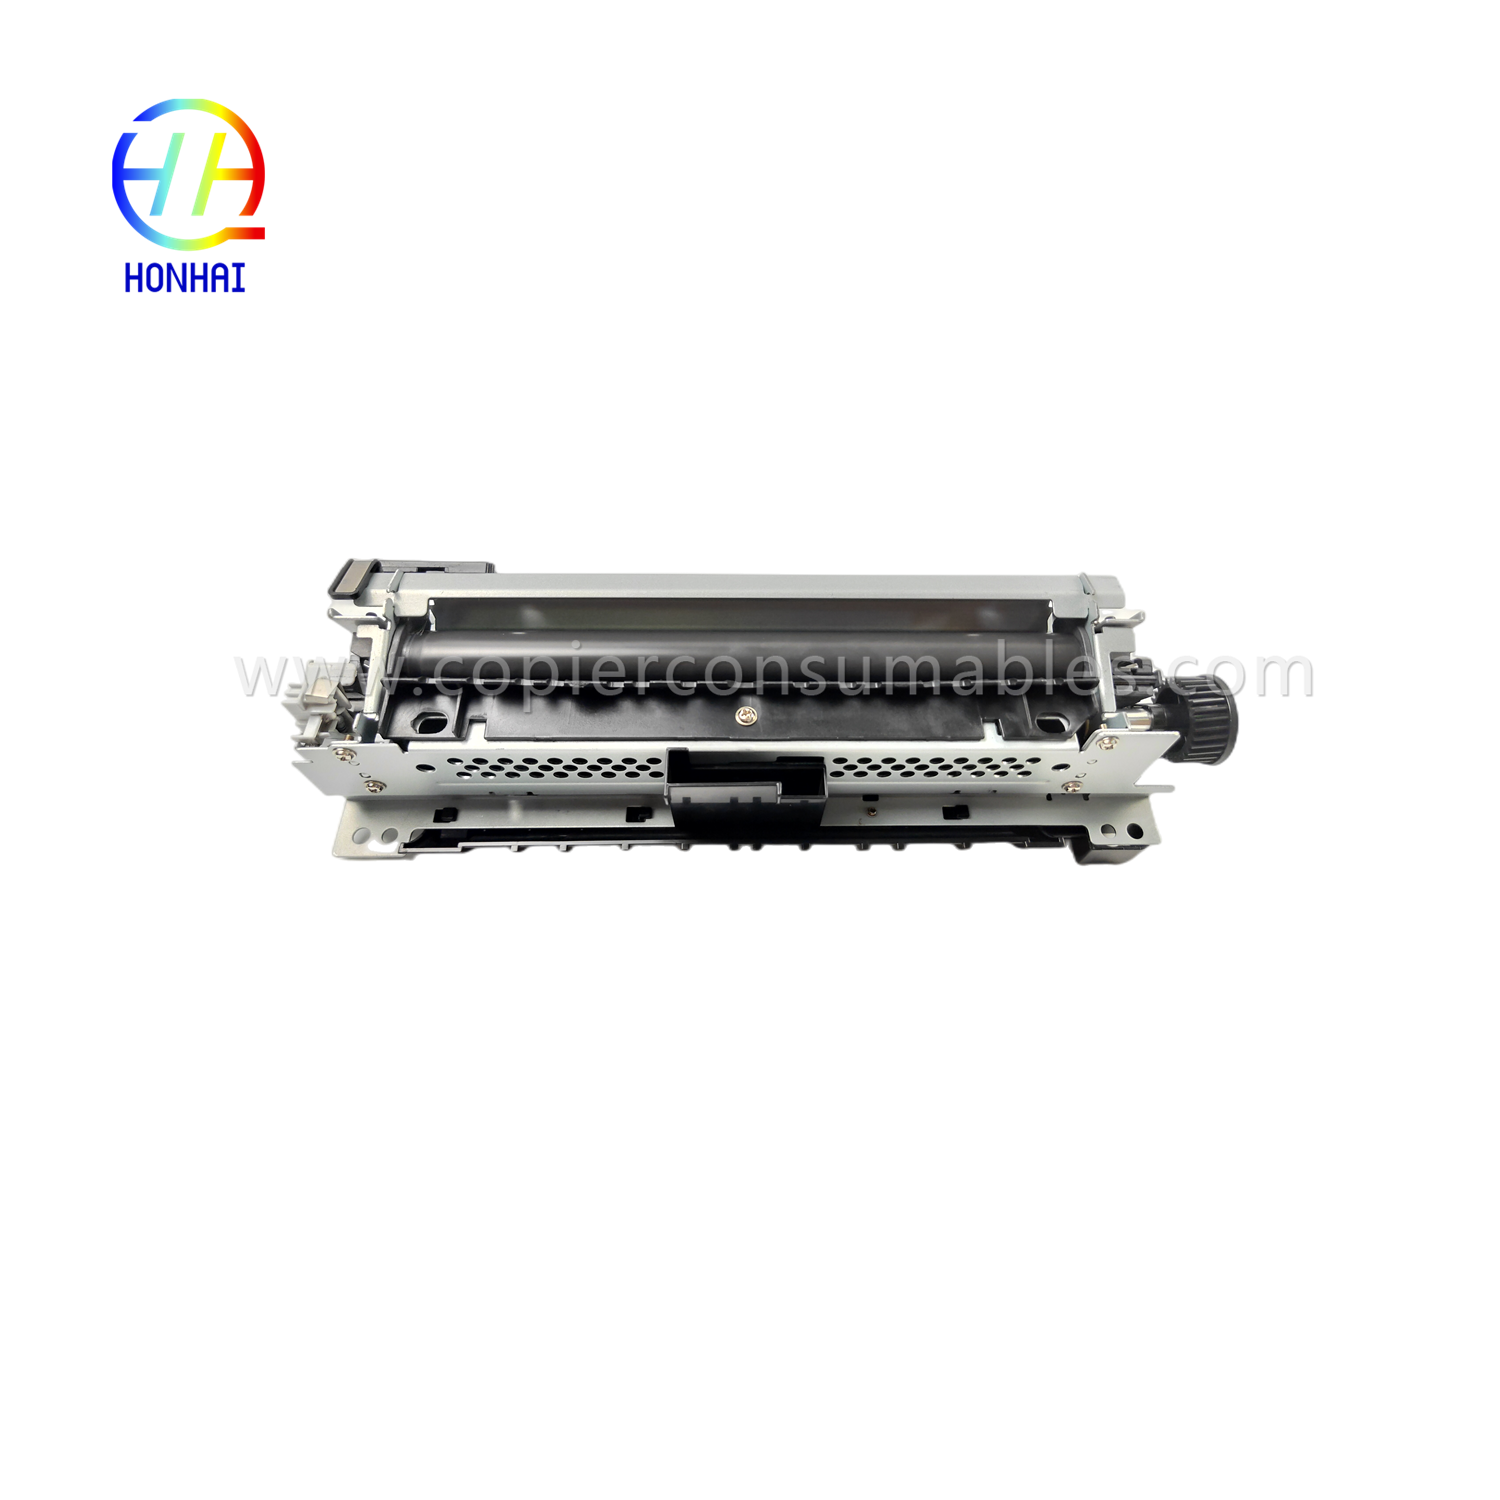 https://c585.goodao.net/fuser-assembly-220v-japan-for-hp-521-525-m521-m525-rm1-8508-rm1-8508-000-fuser-unit-product/